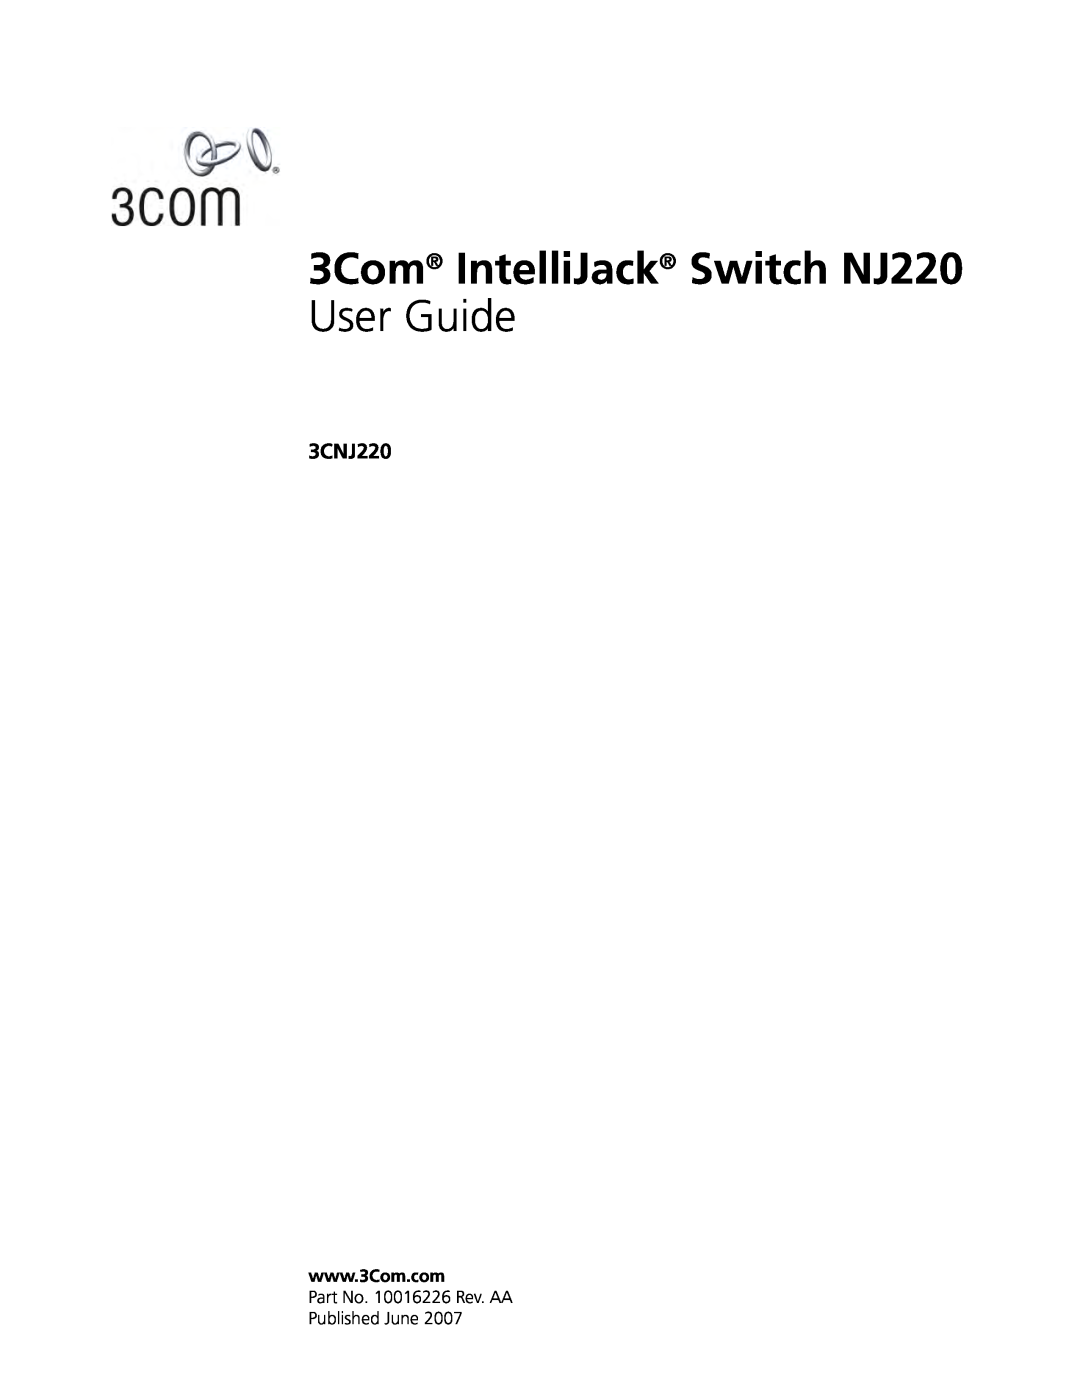 3Com manual 3CNJ220, 3Com IntelliJack Switch NJ220, User Guide 